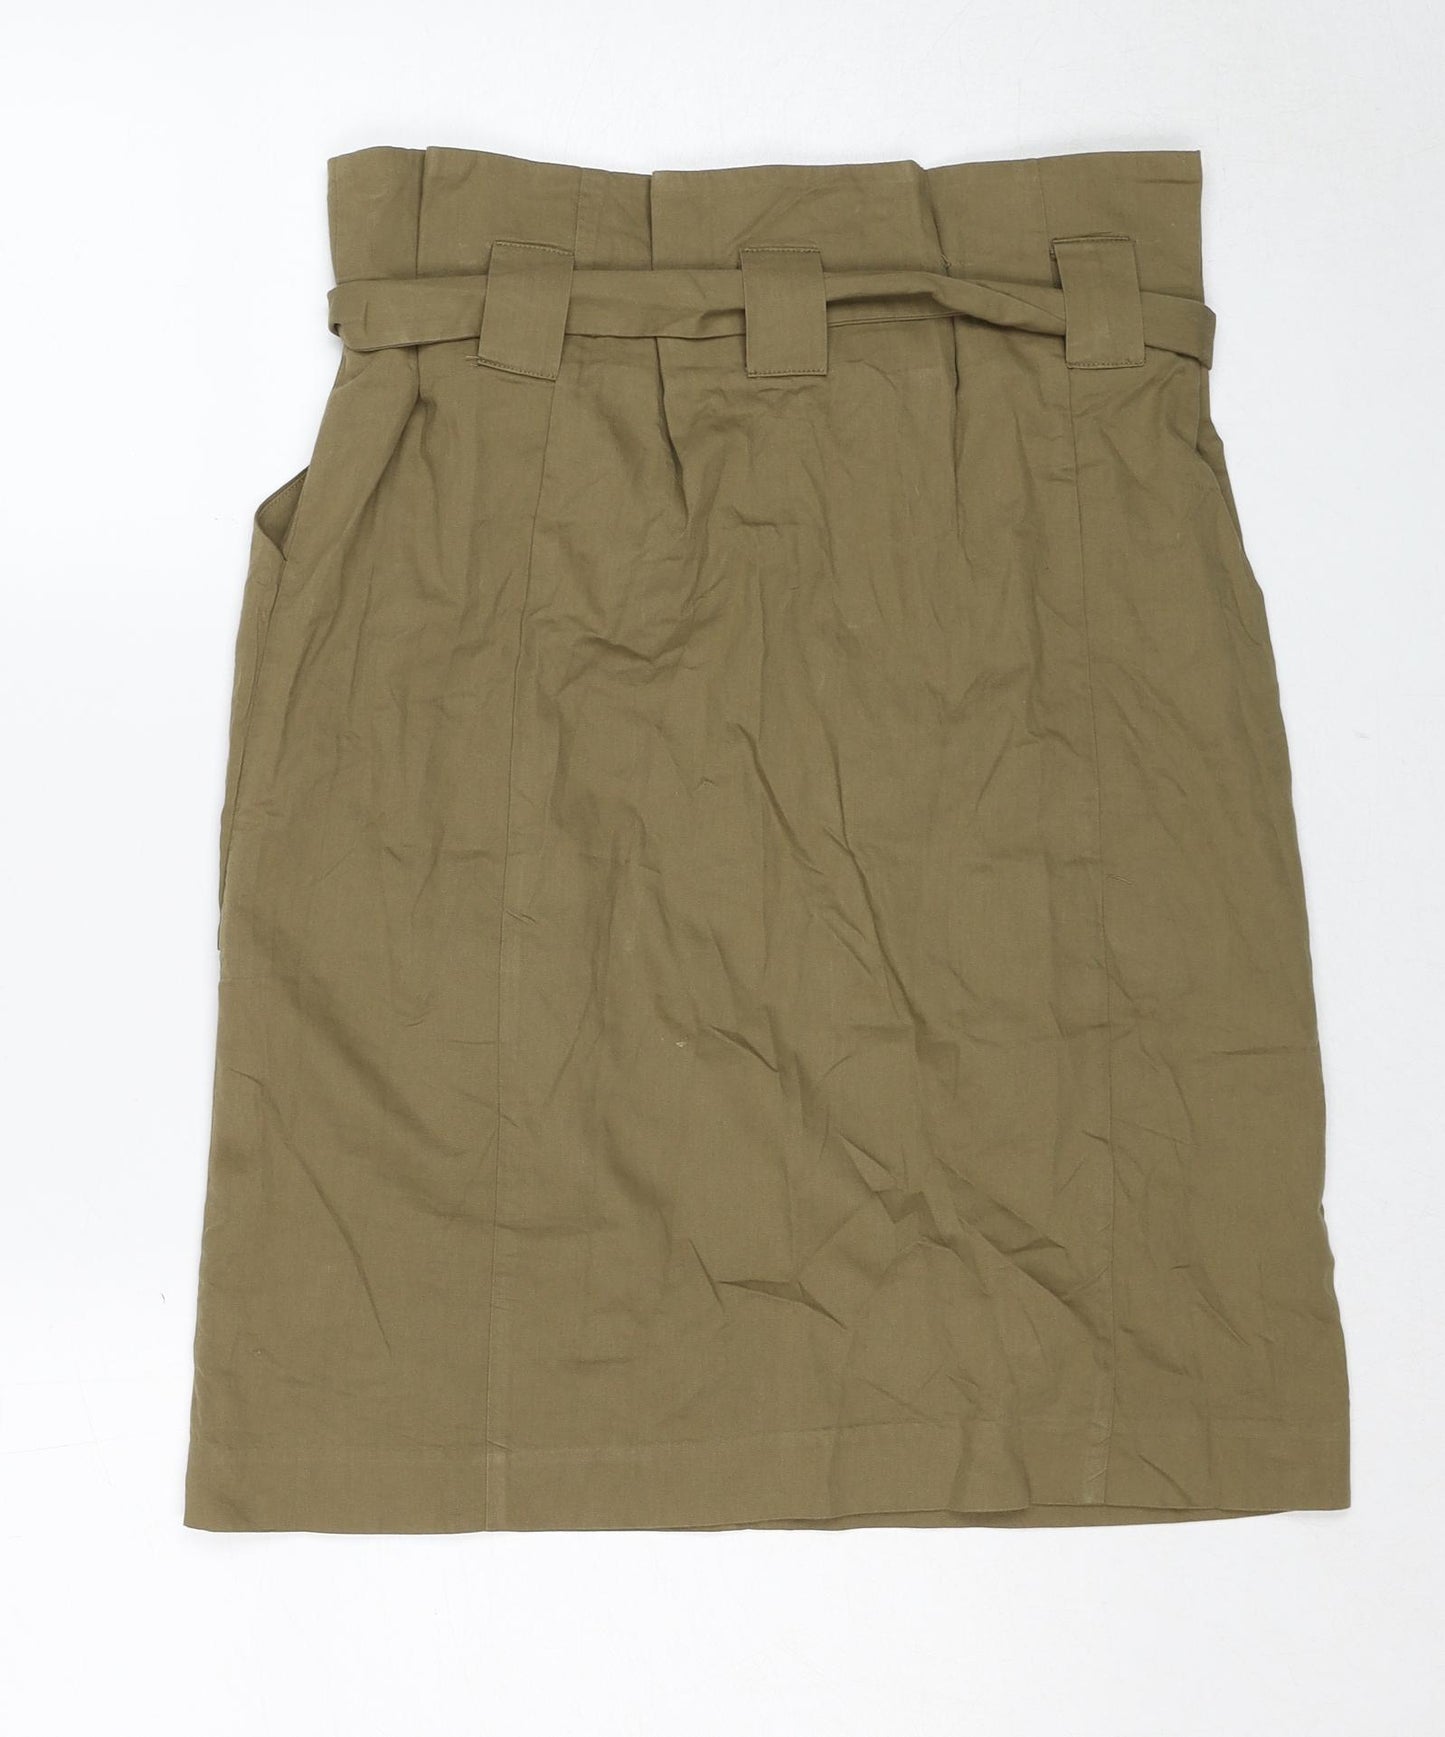 H&M Womens Green Cotton Cargo Skirt Size 12 Zip - Belt Included